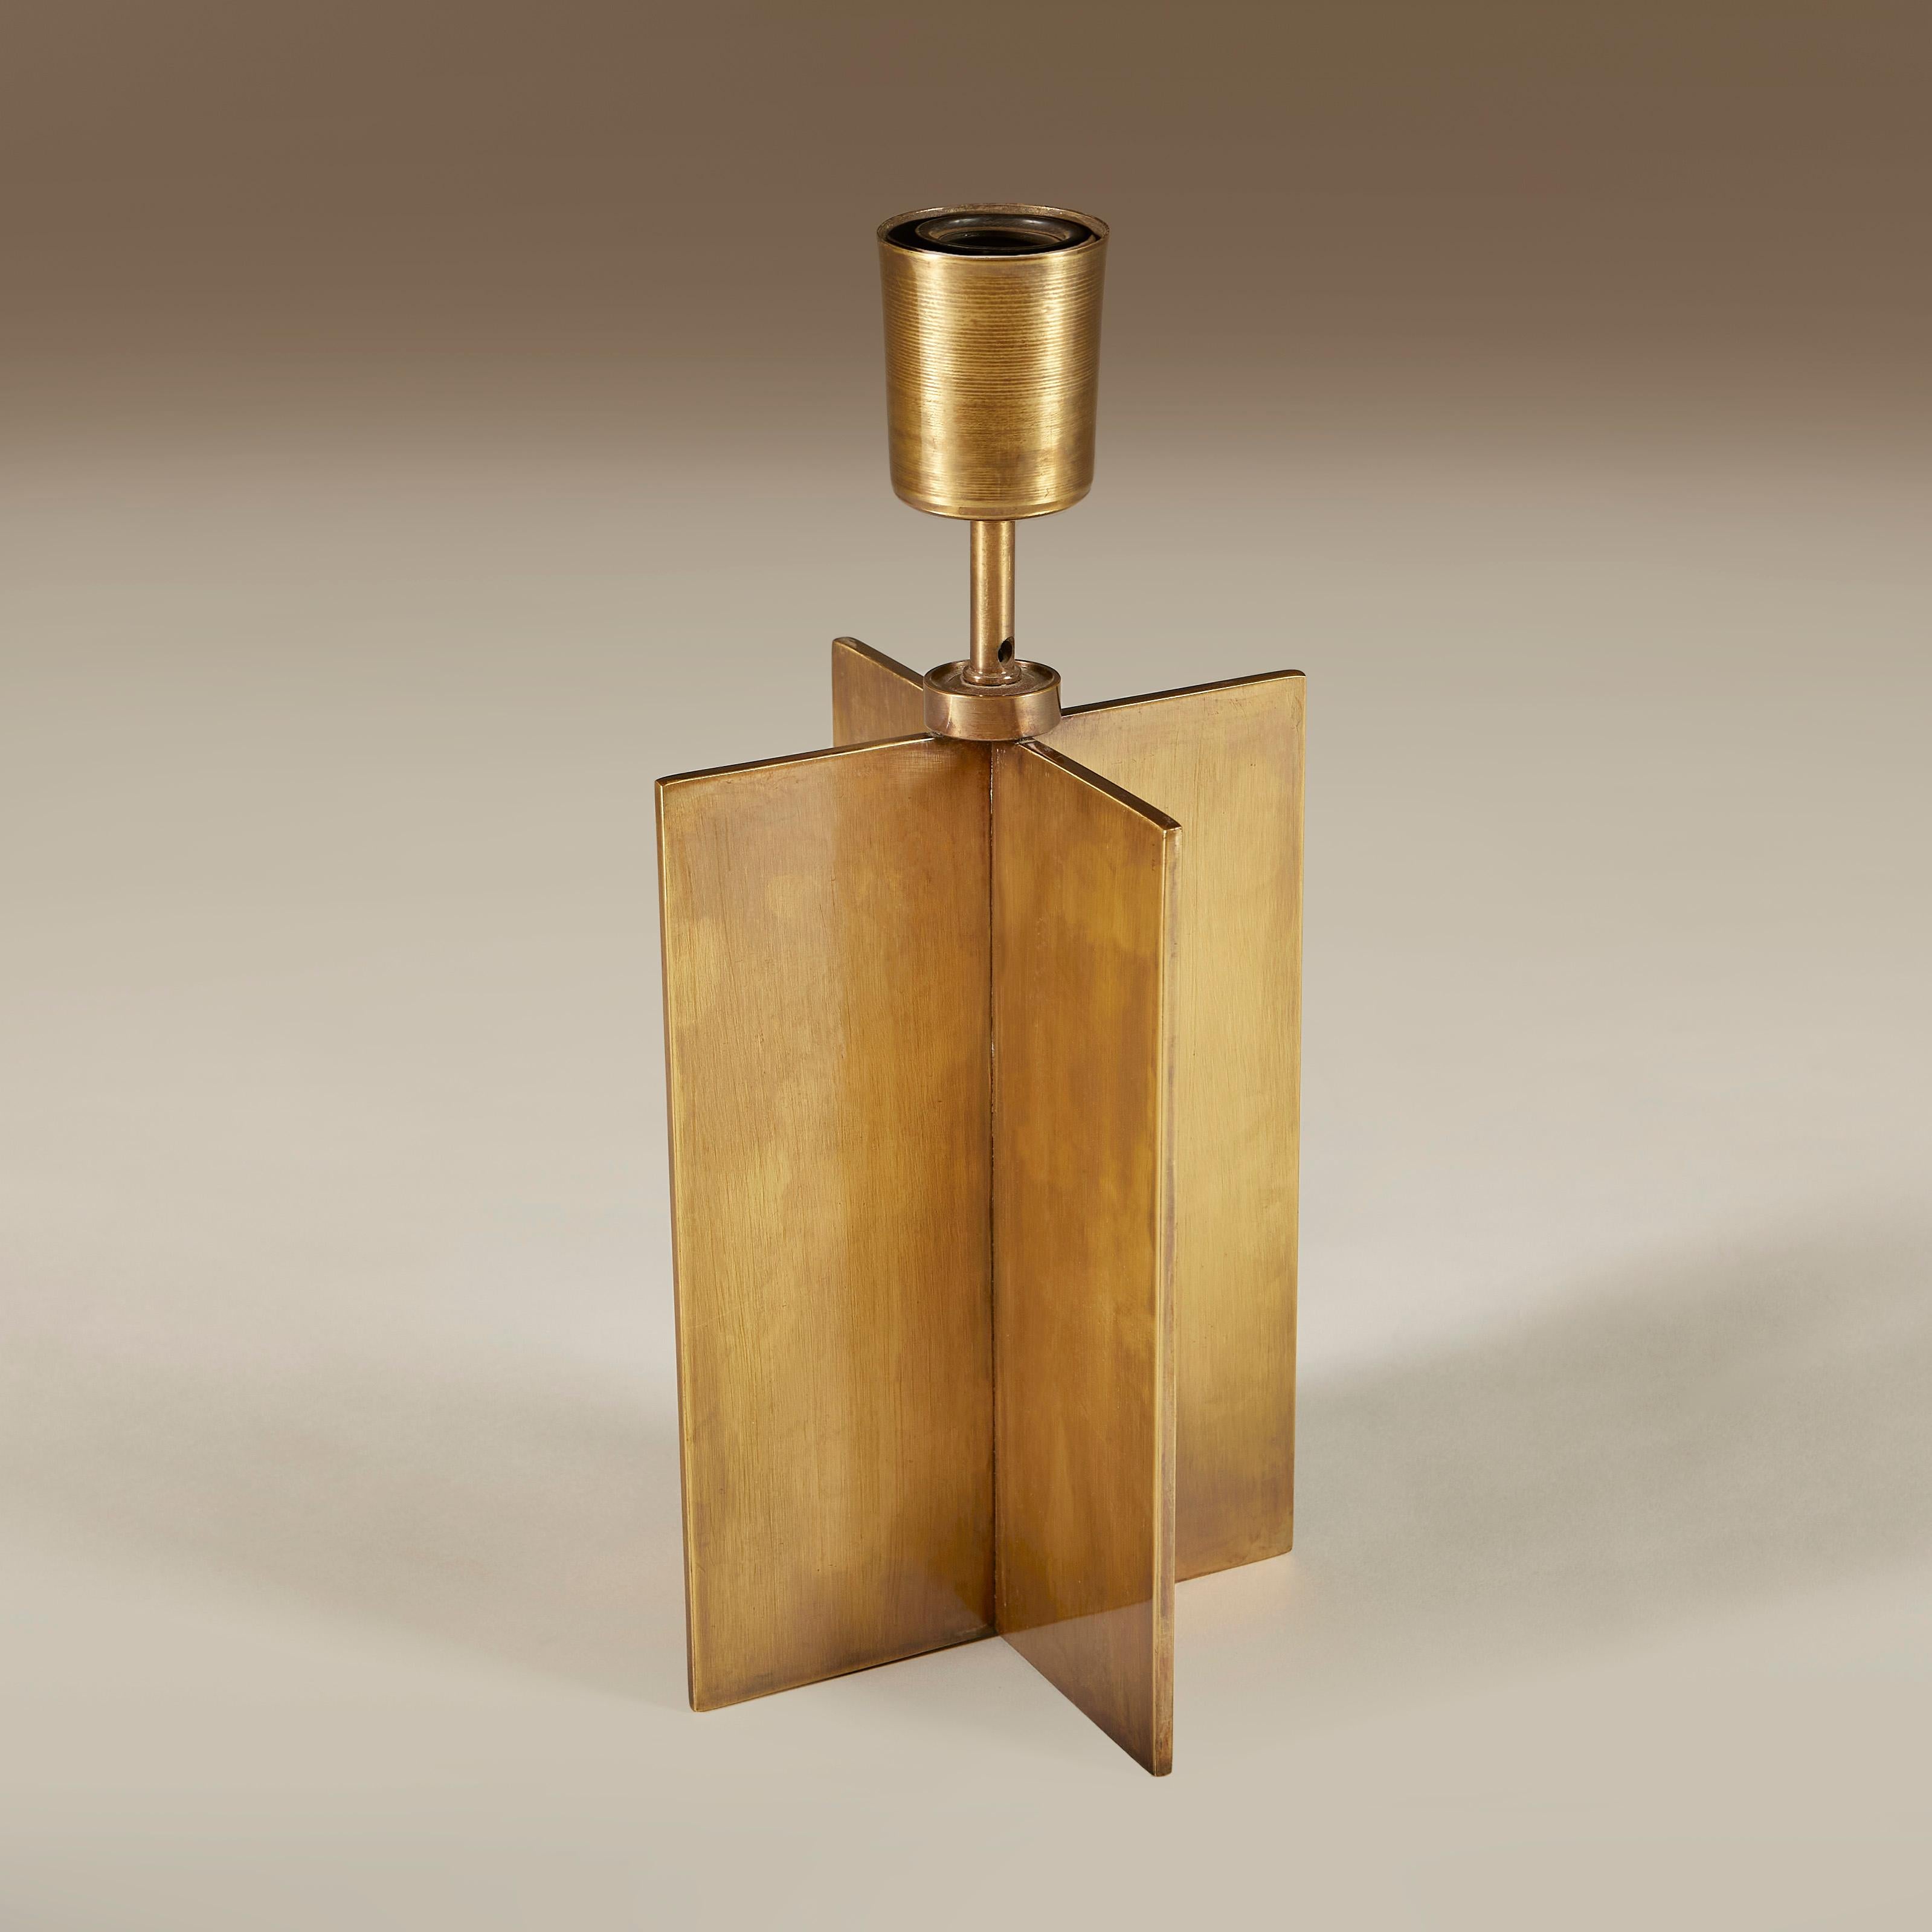 French Pair of Original Jean-Michel Frank “Croisillon” Bronze Table Lamps, circa 1935 For Sale